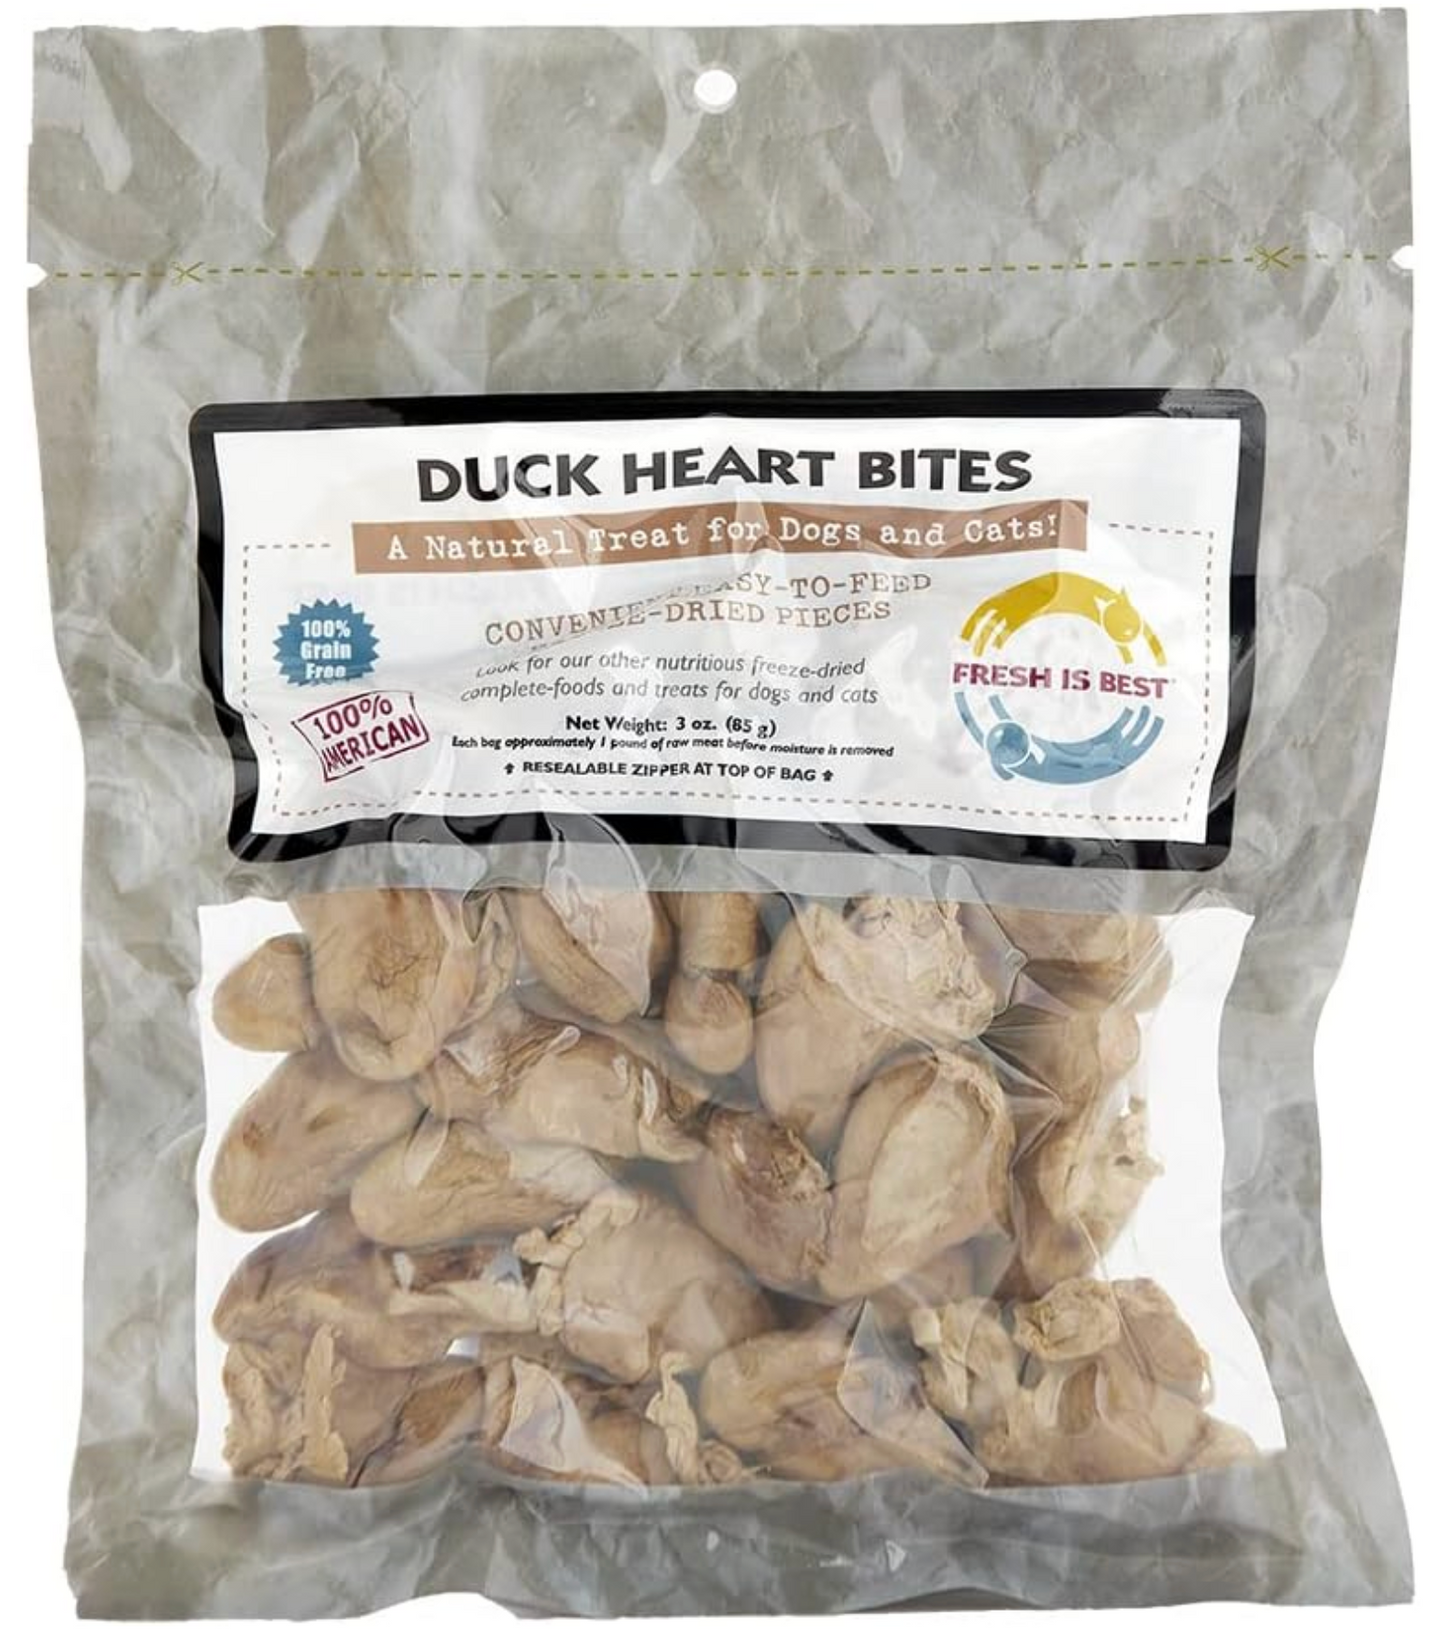 Fresh is Best Duck Heart Bites 3 oz.